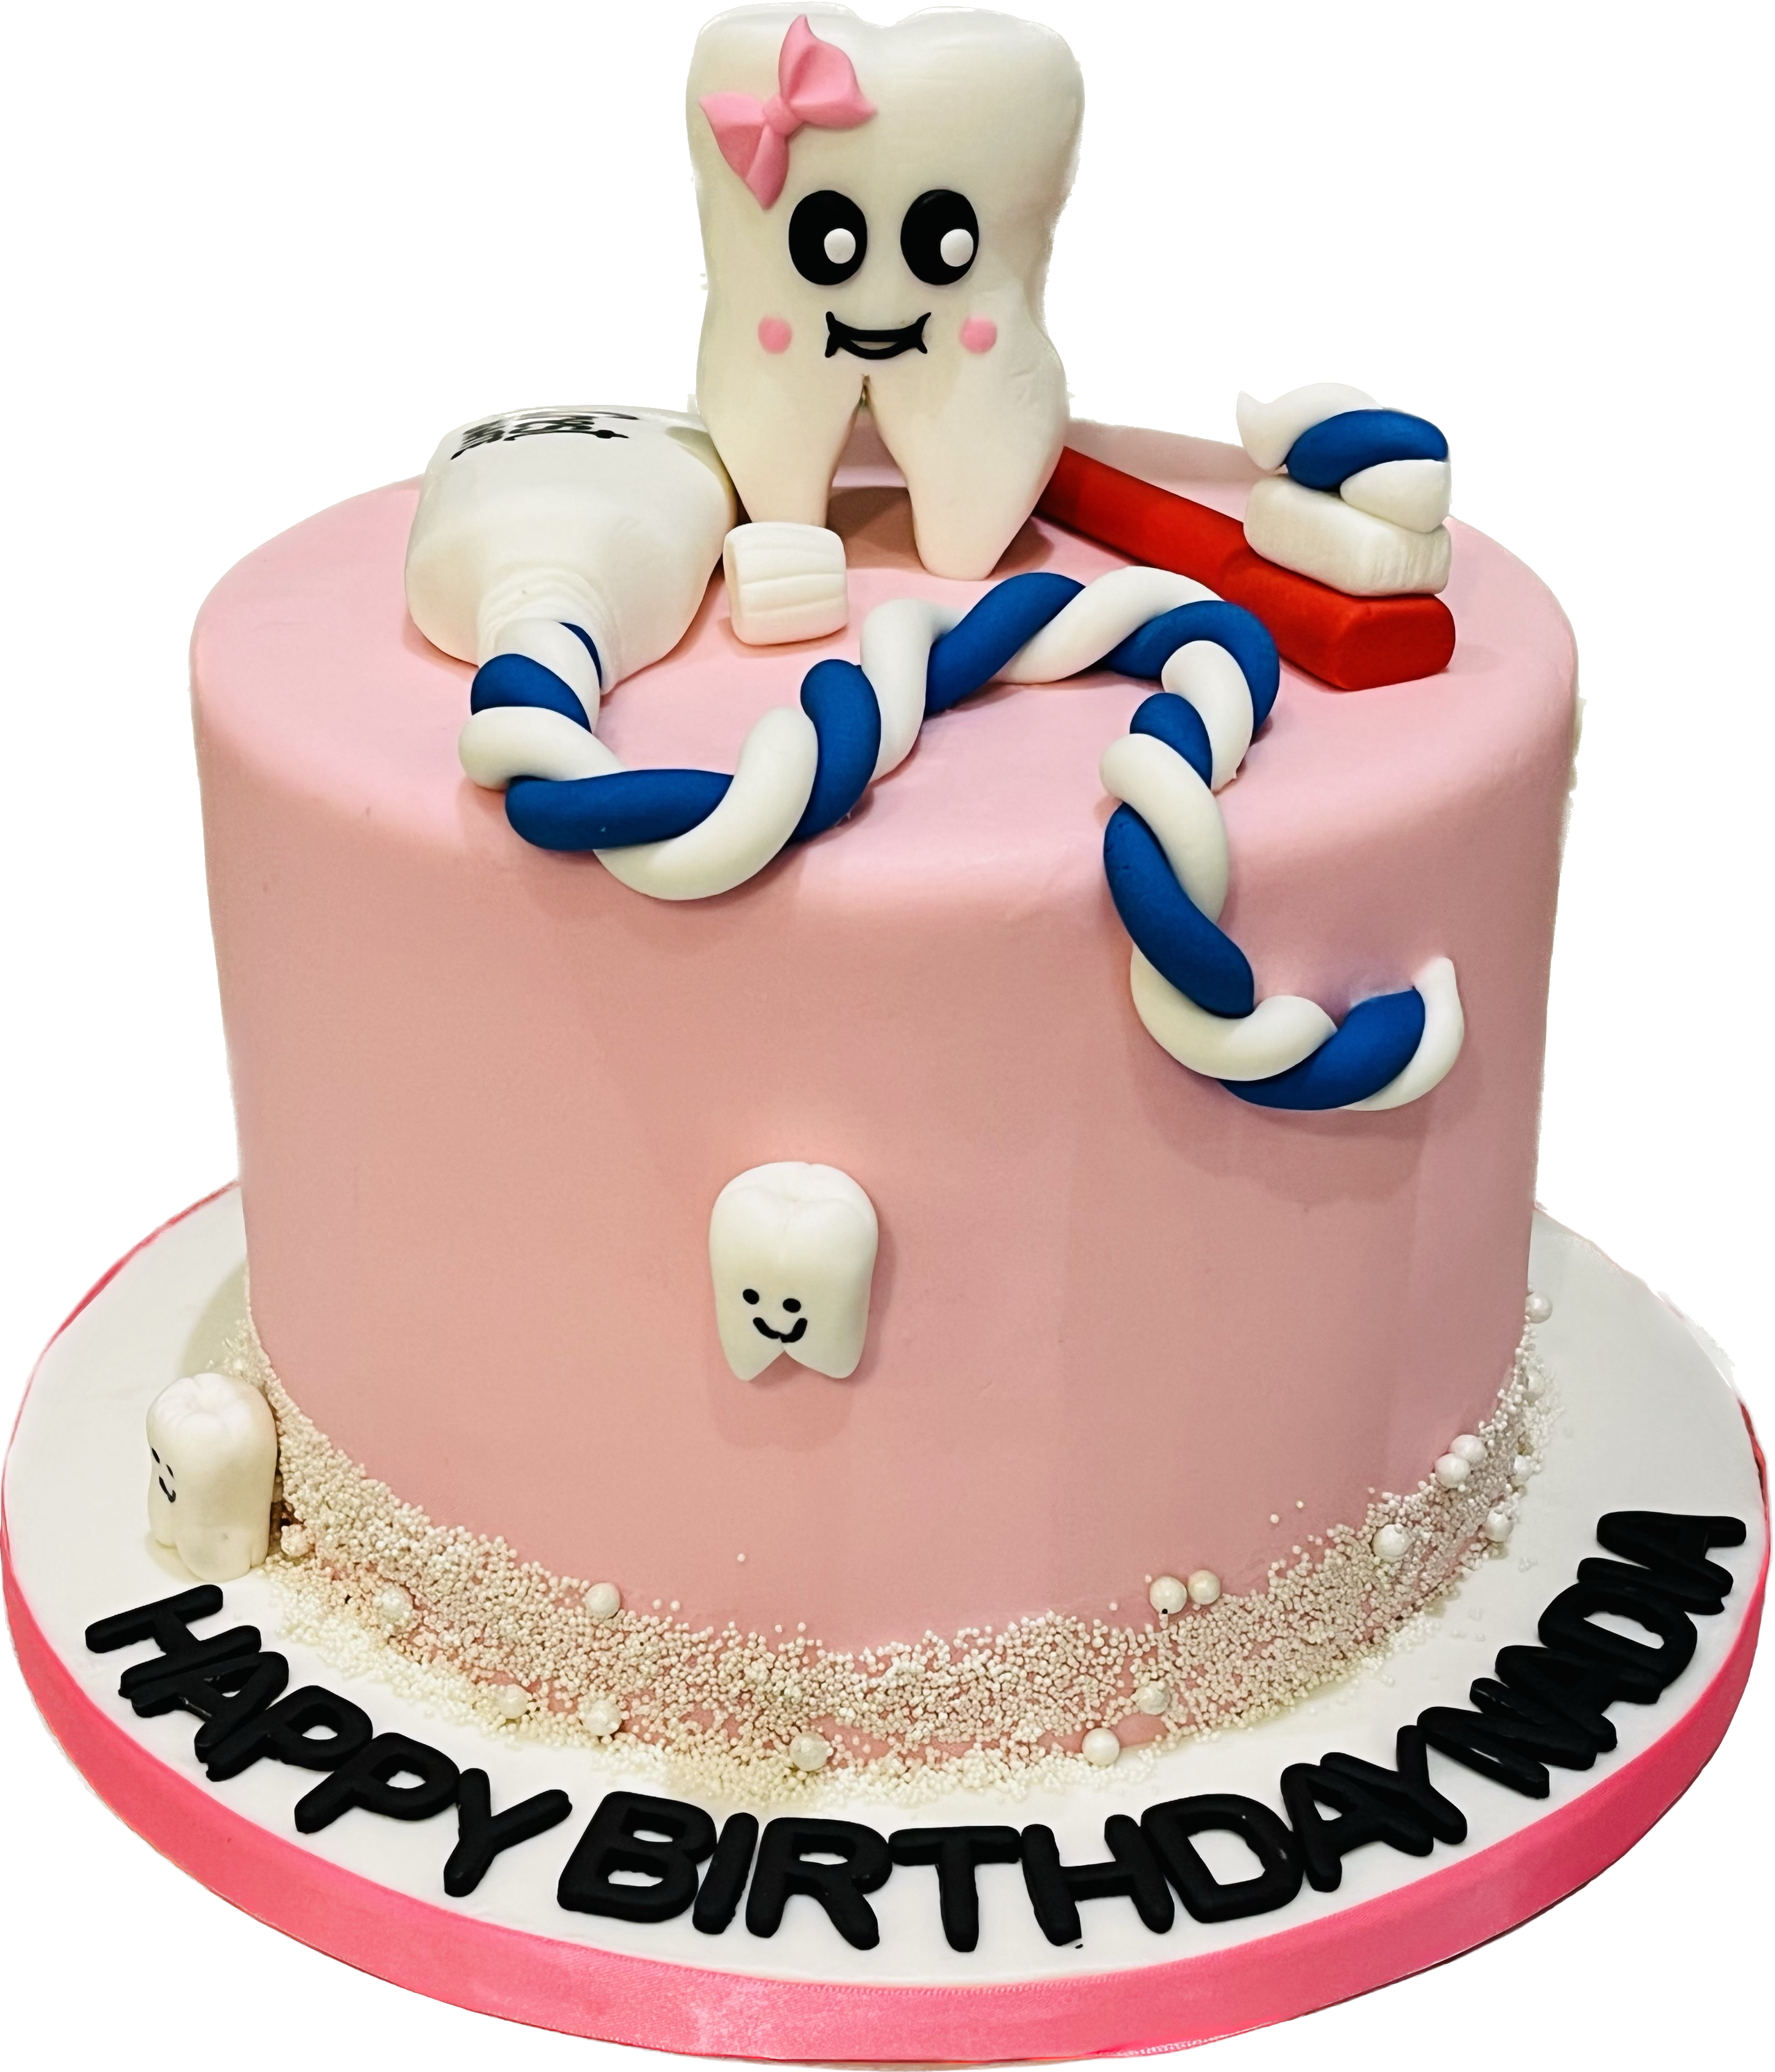 Dentist Theme Based Cake